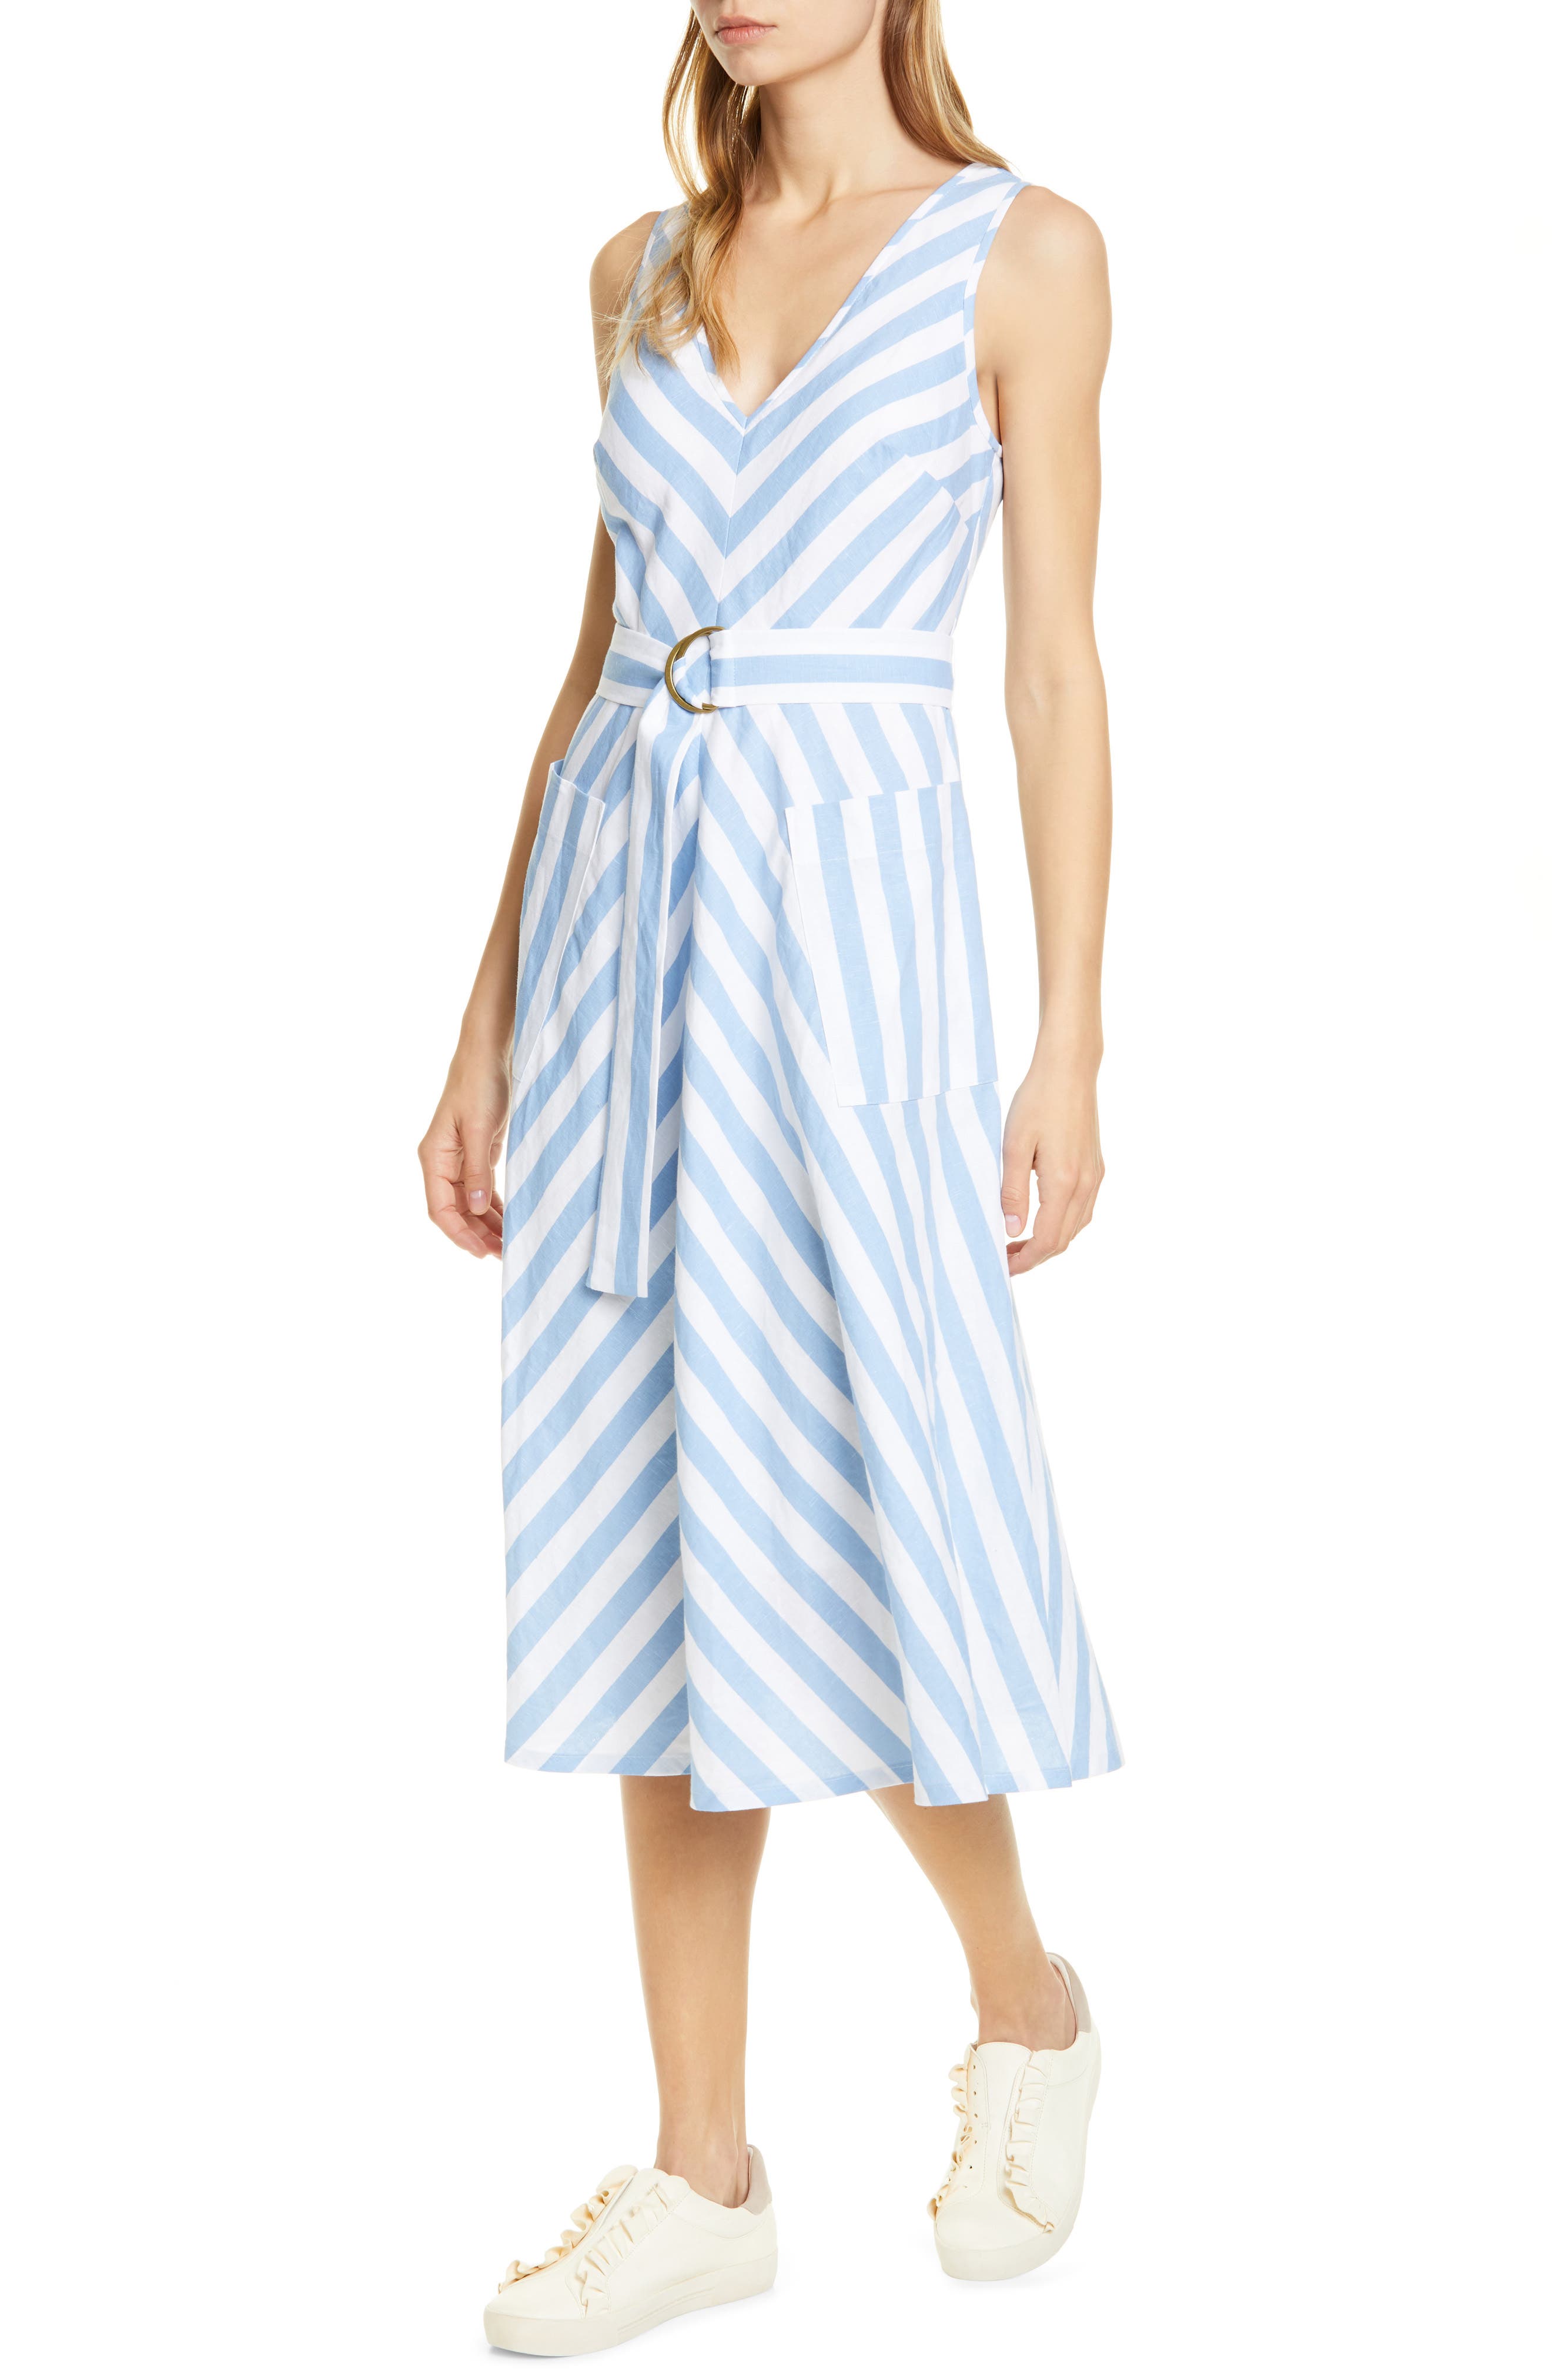 kate spade blue and white dress